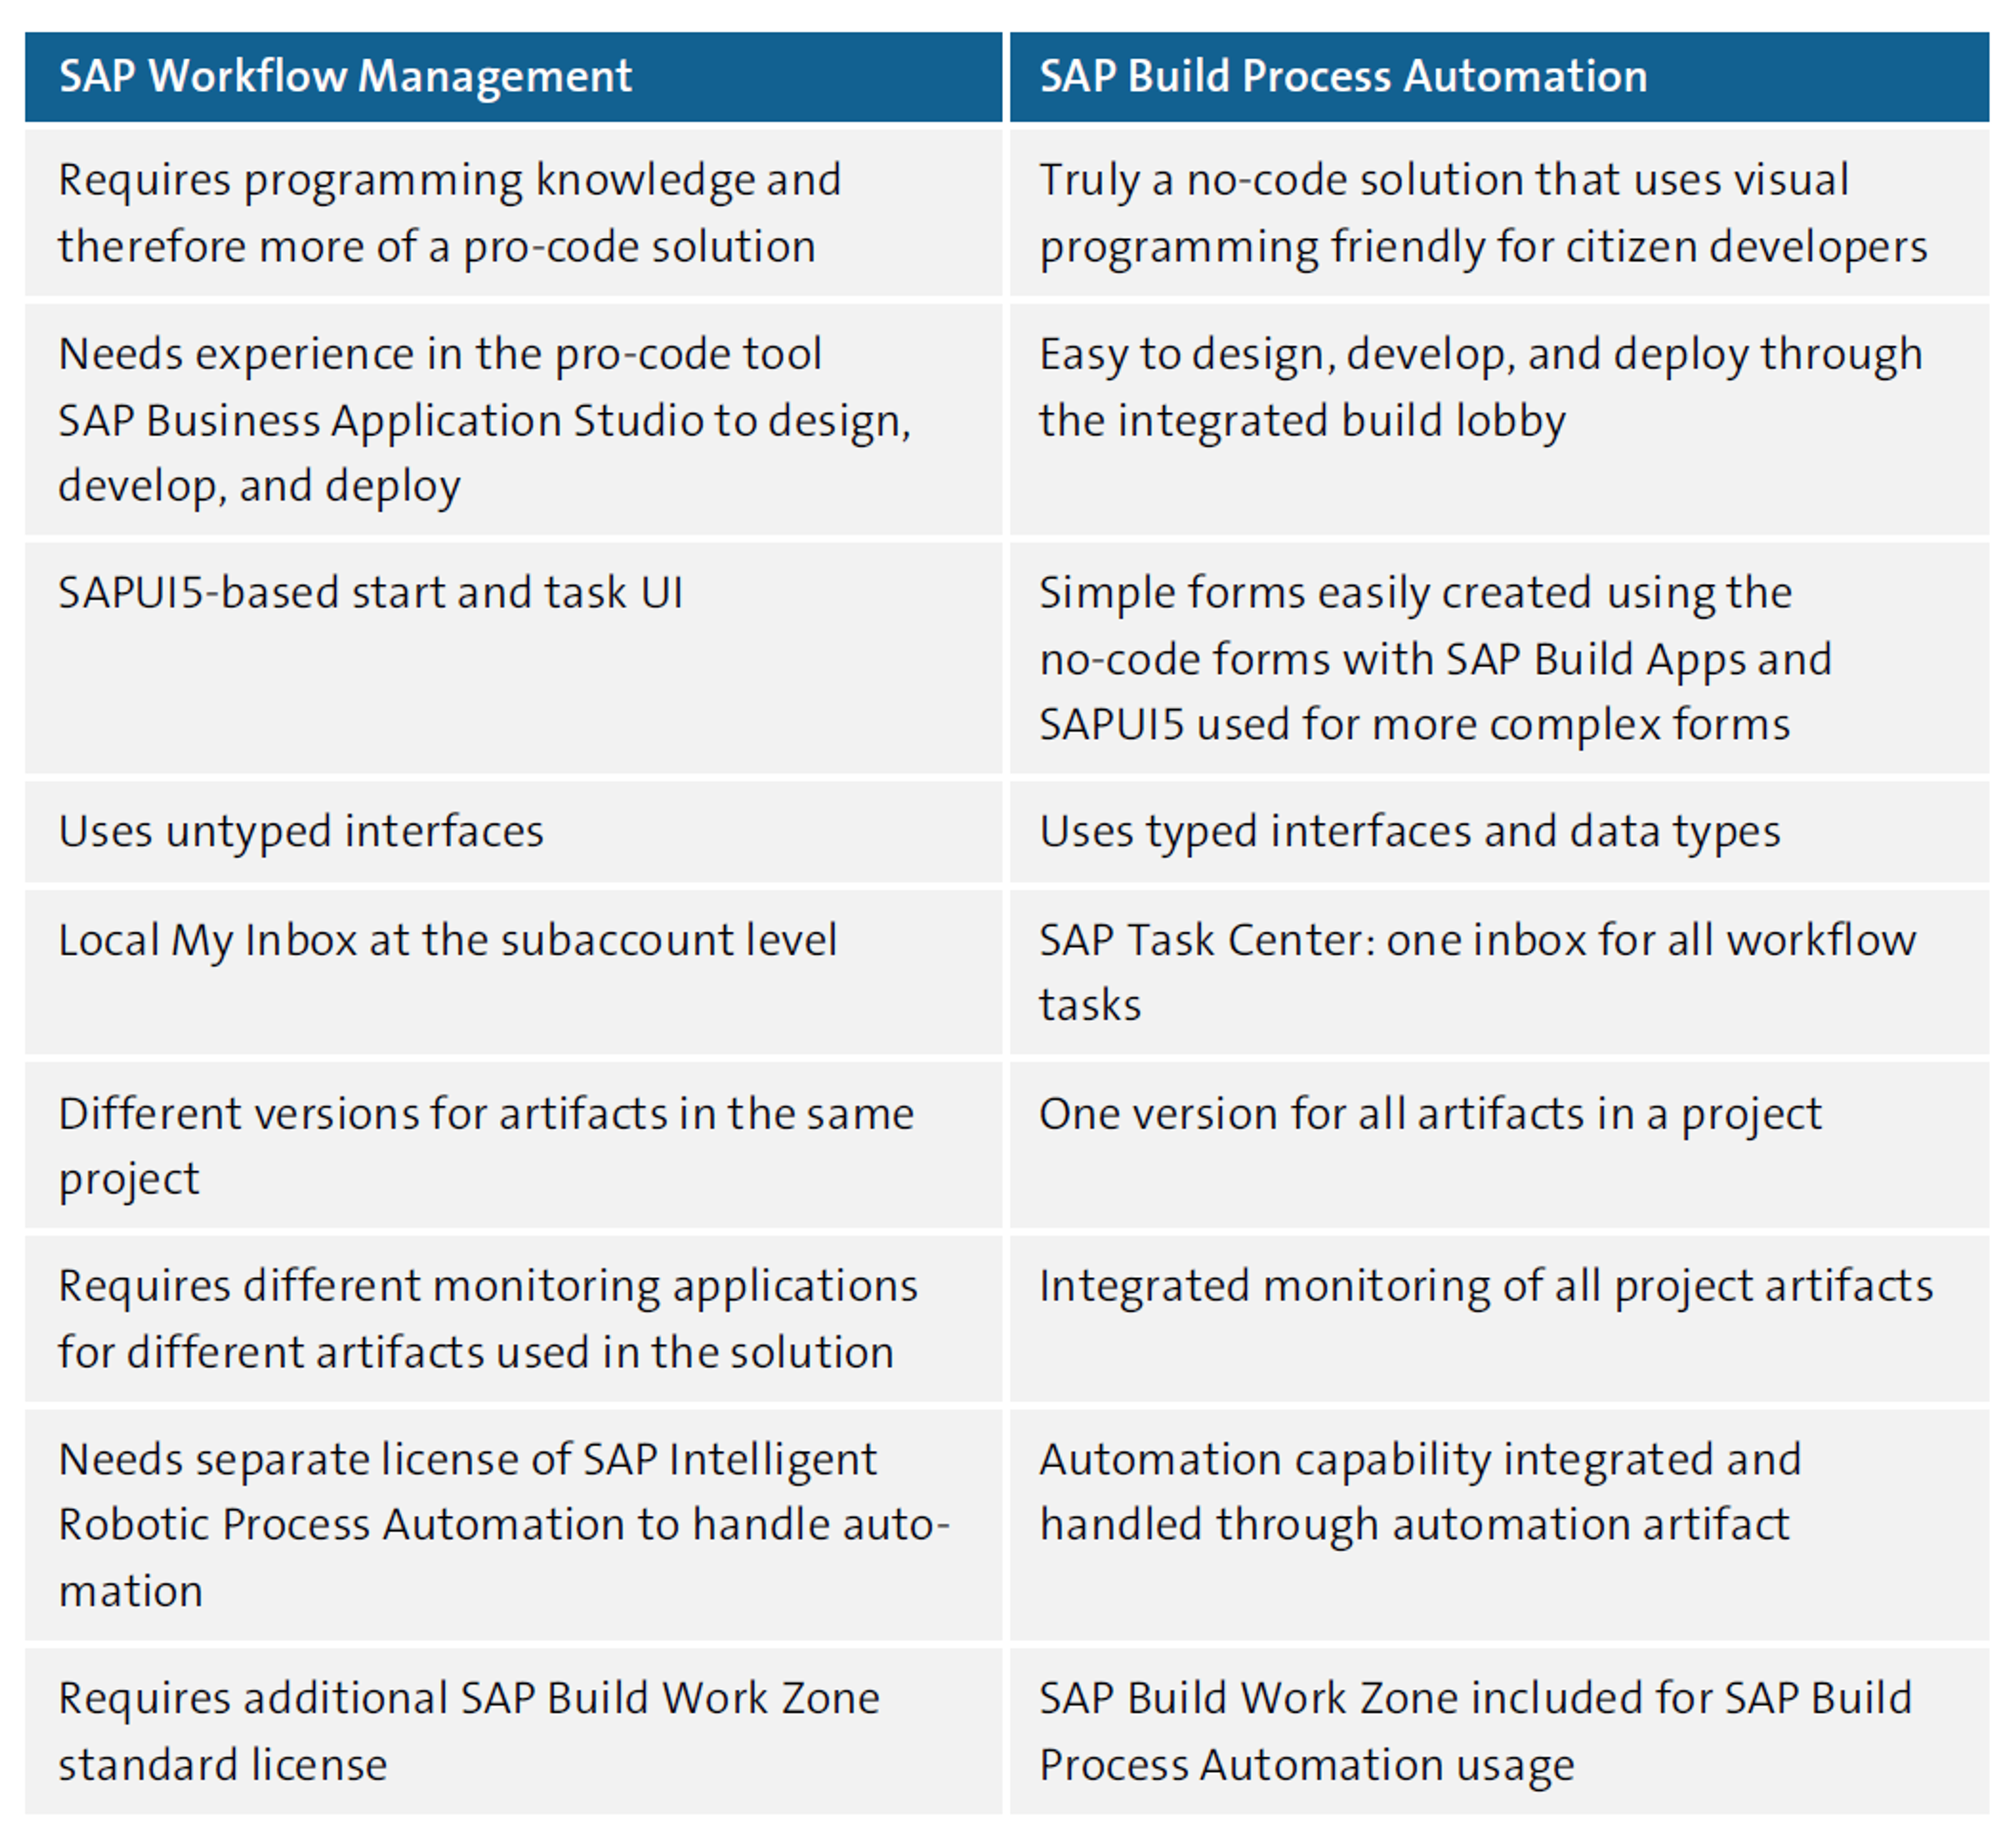 Comparison between SAP Workflow Management and SAP Build Process Automation Capabilities